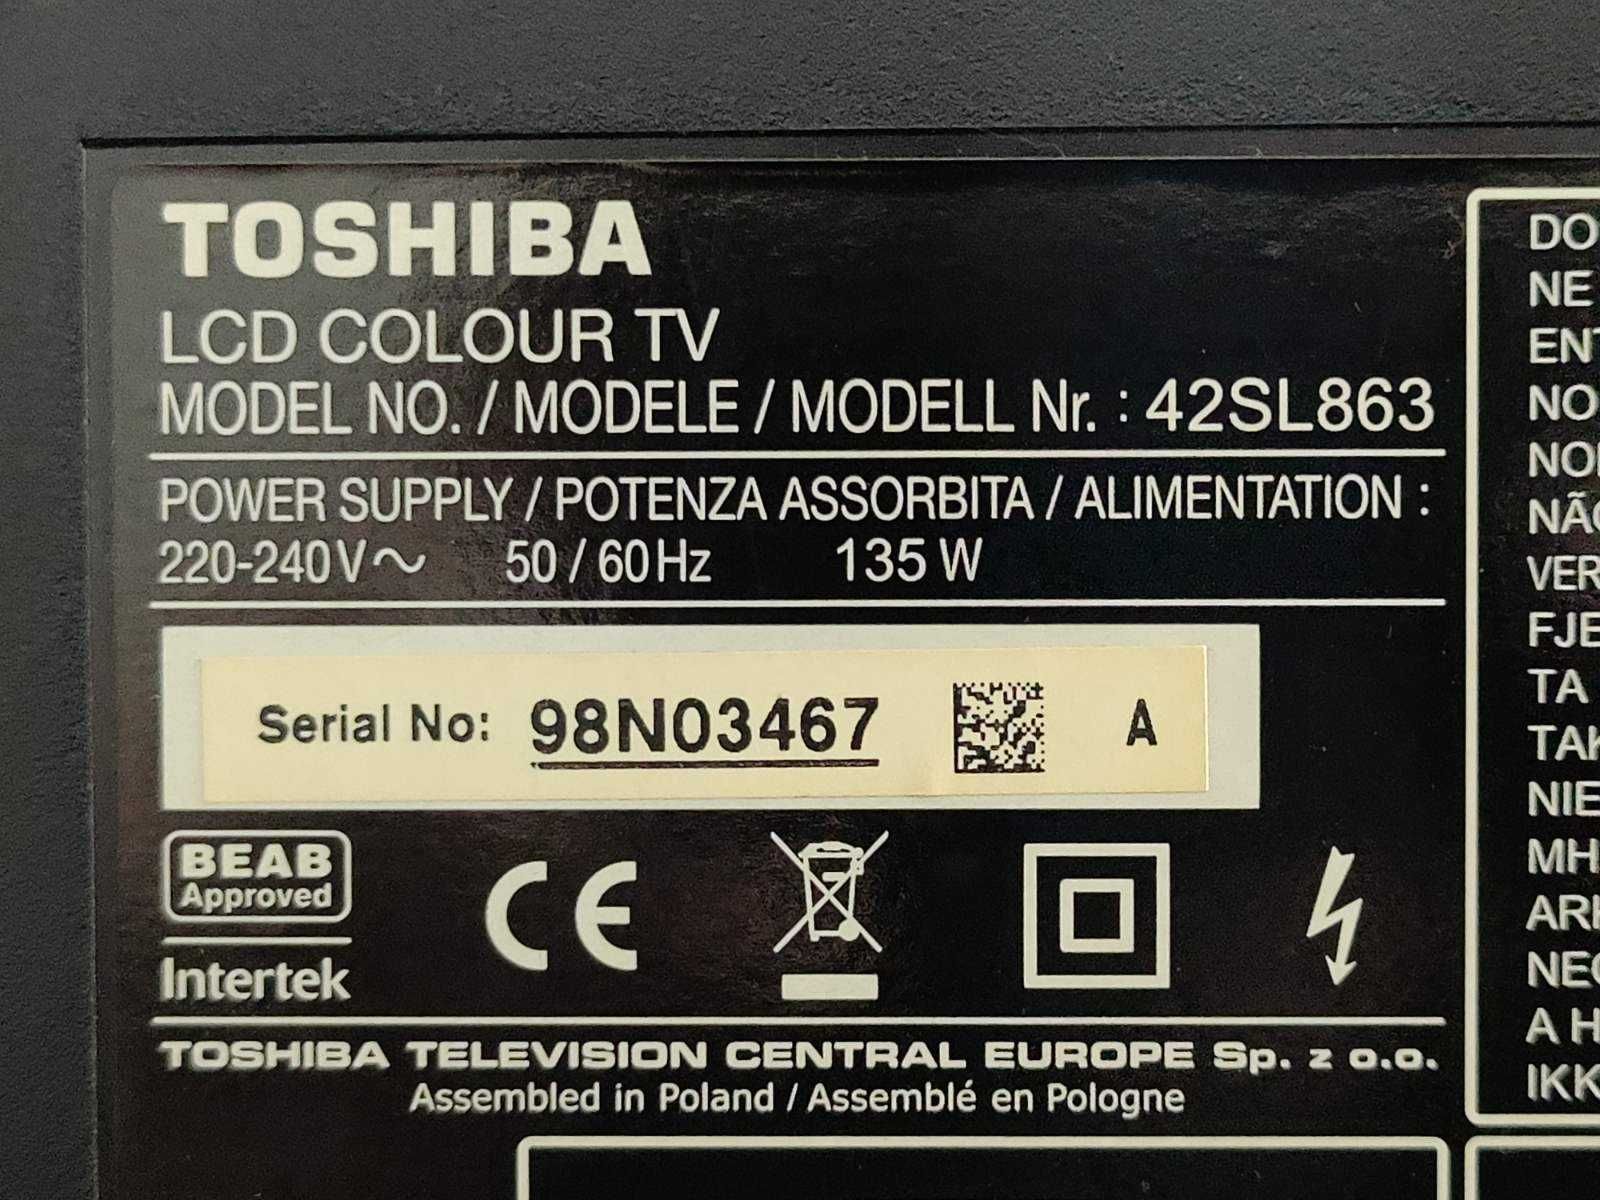 Full HD LED Tv Toshiba 42SL863 Wi-Fi Ready